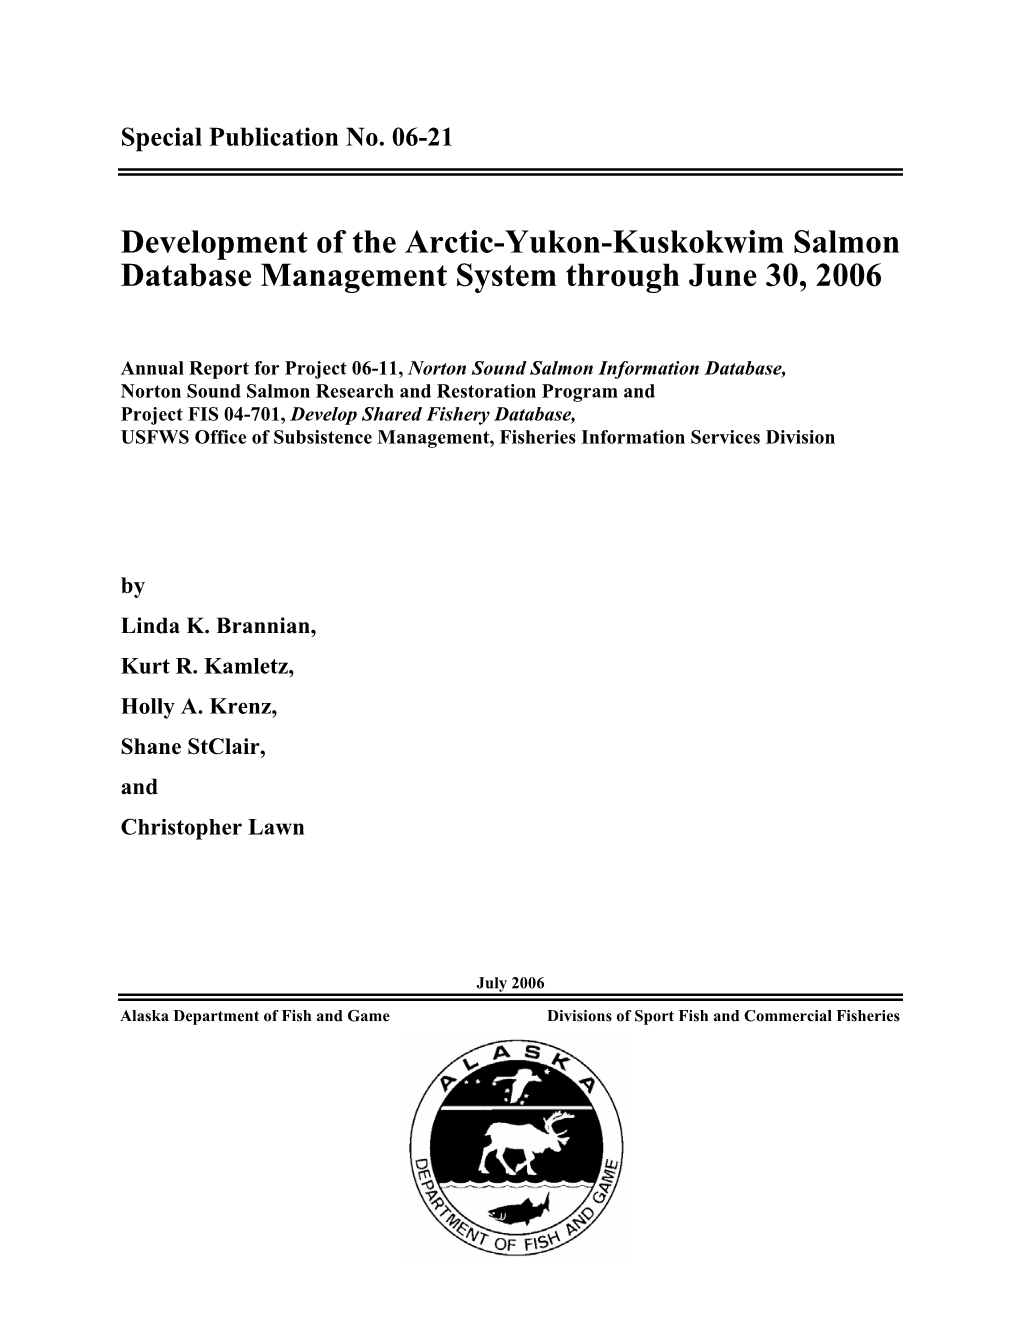 Development of the Arctic-Yukon-Kuskokwim Salmon Database Management System Through June 30, 2006